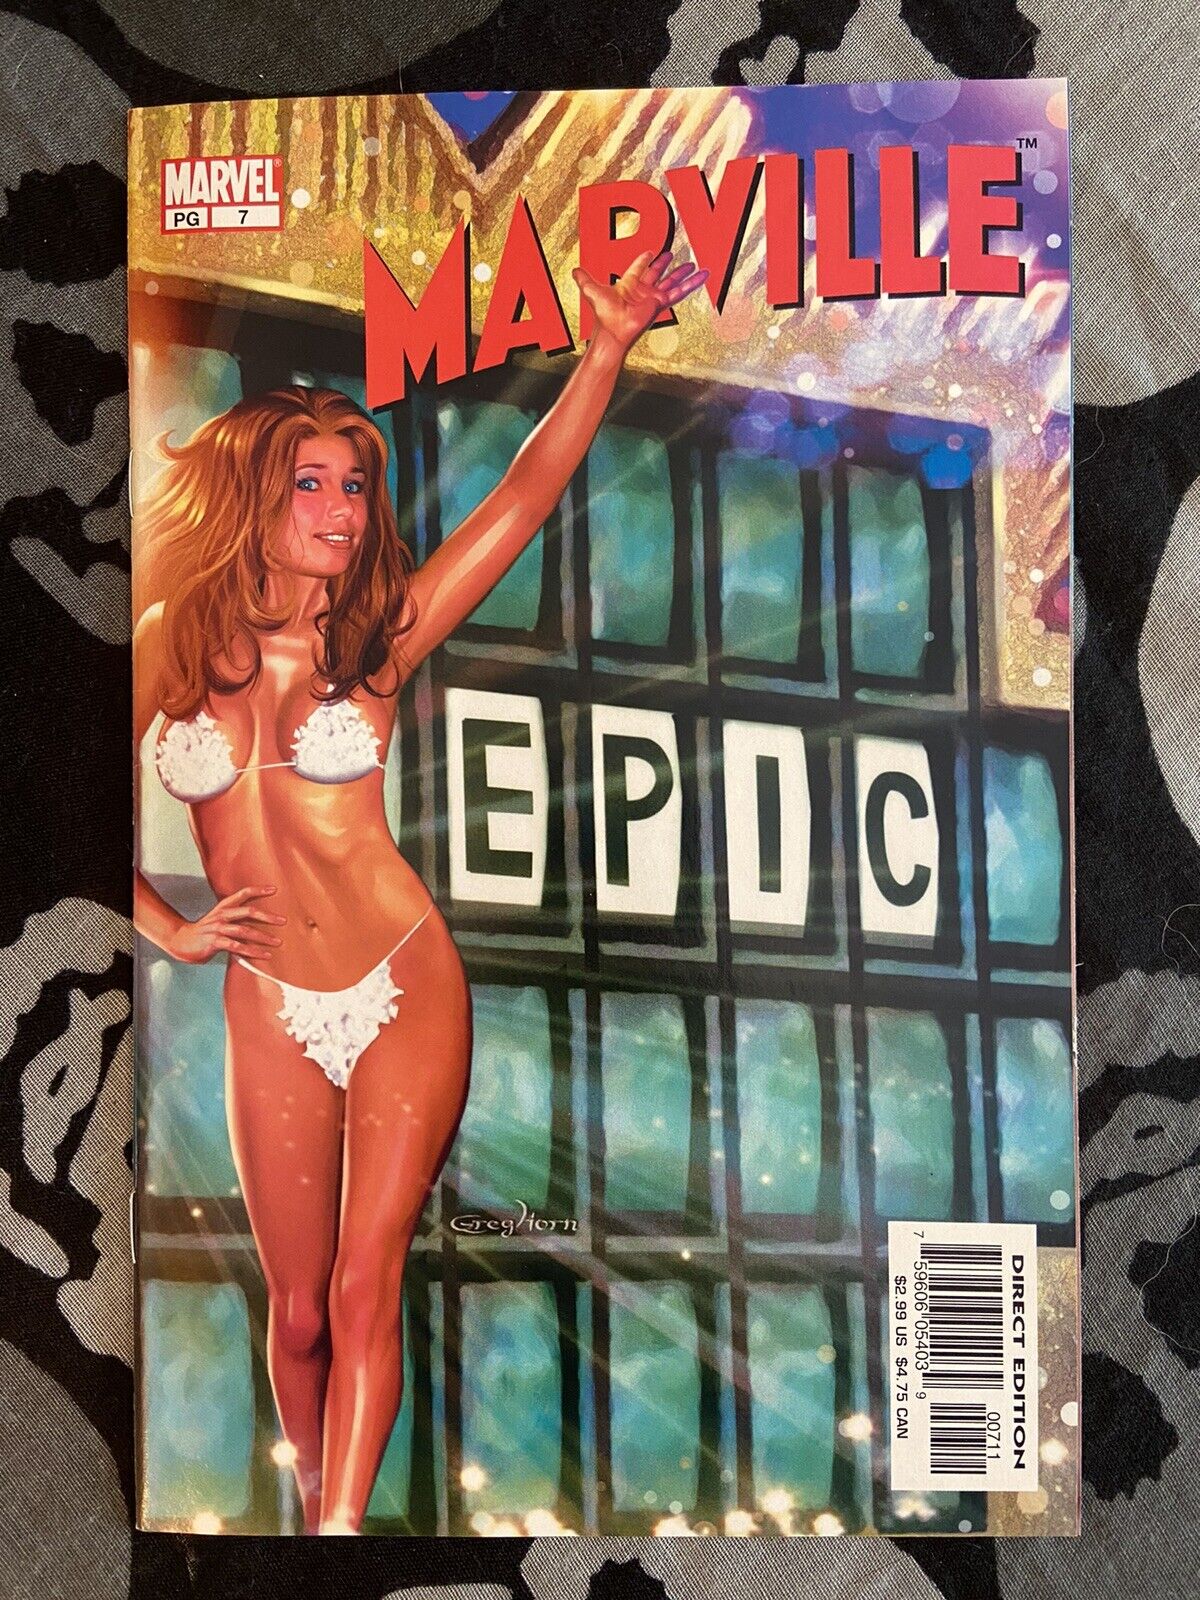 MARVILLE #7 (2003) COVER ART BY GREG HORN